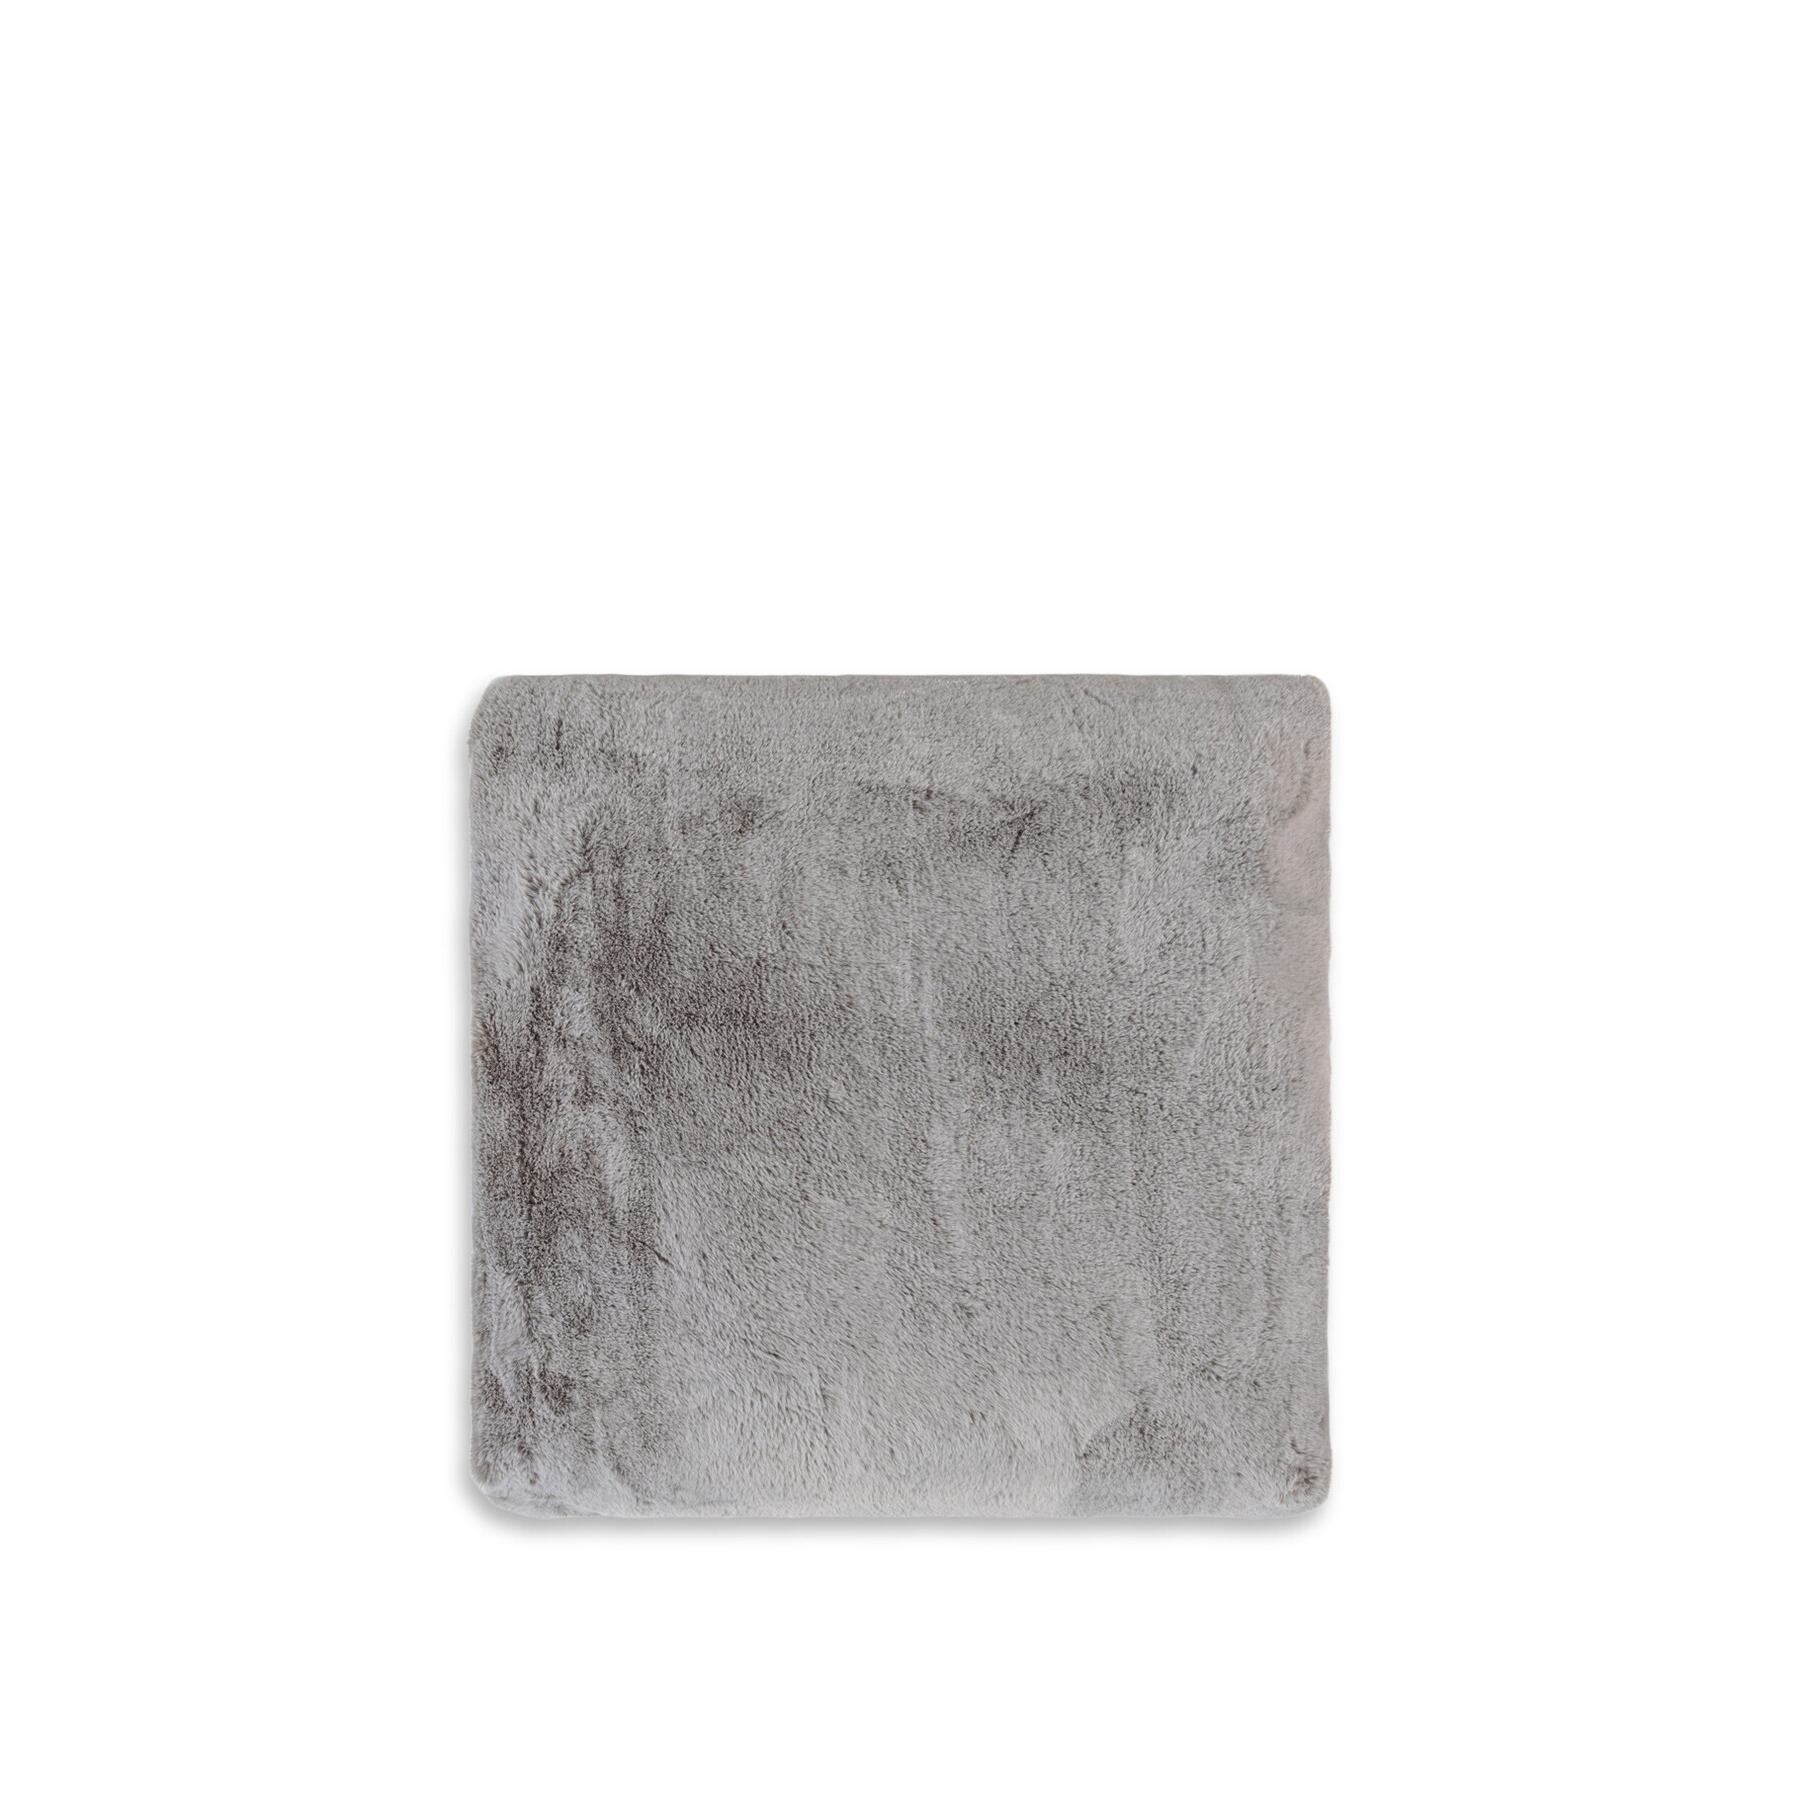 Heal's Arctic faux fur throw grey 150 x 200 - Size 200x150 - image 1